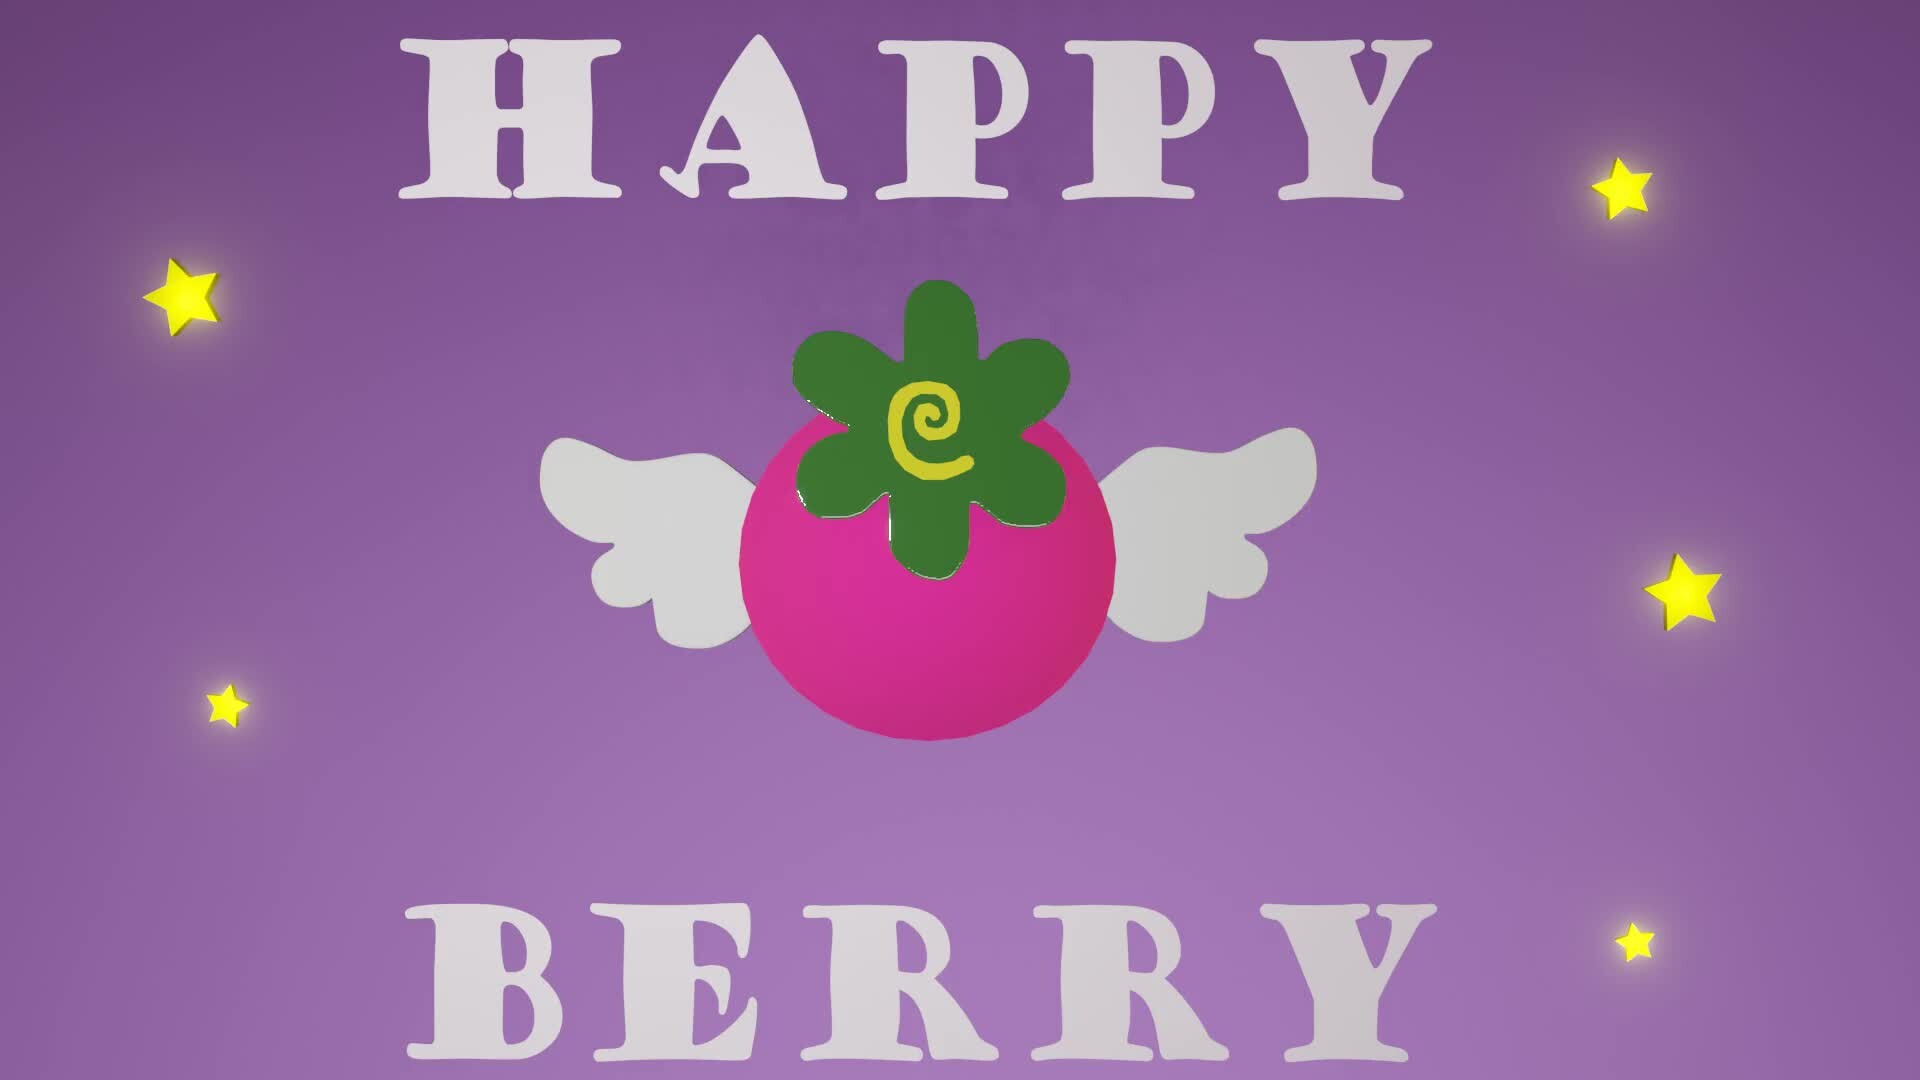 Happy Berry by elisetrinh on DeviantArt